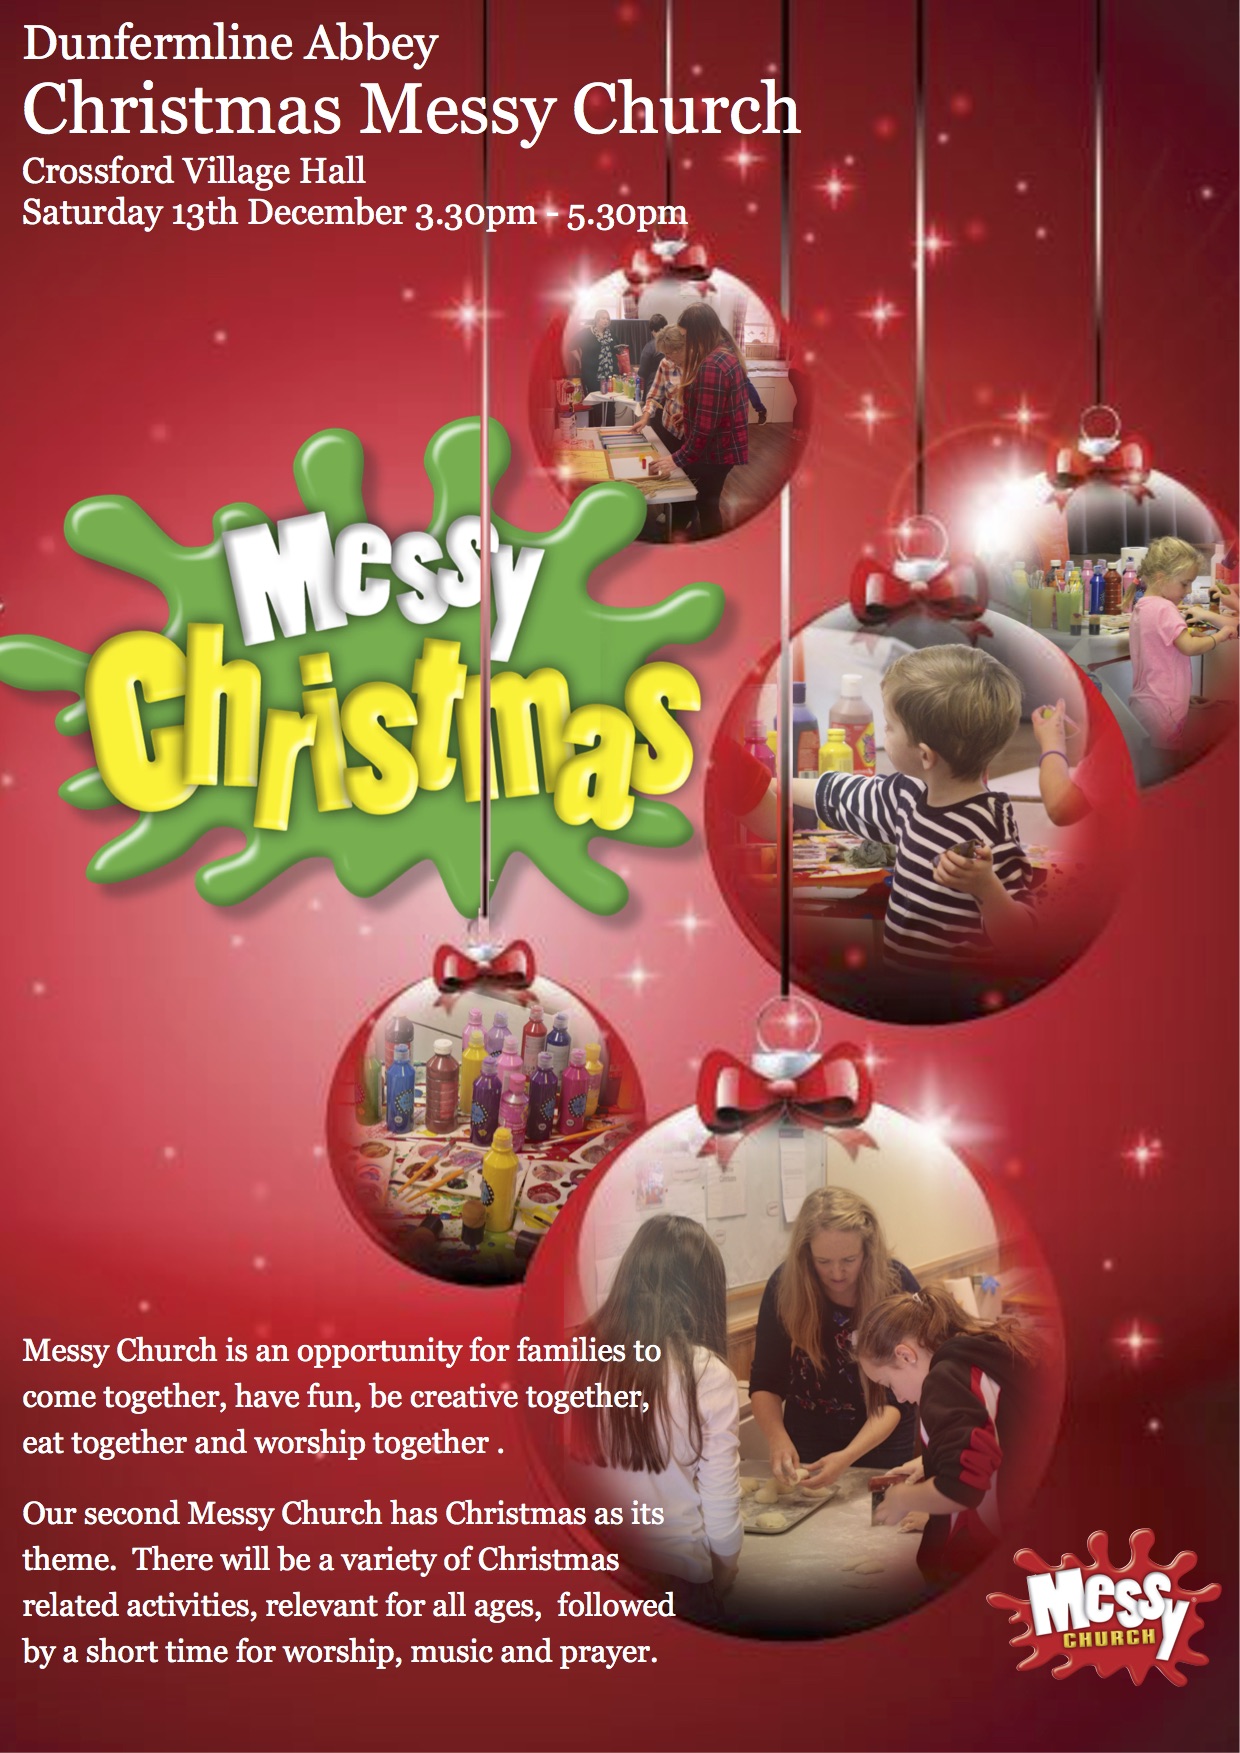 Christmas Messy Church – Dunfermline Abbey
